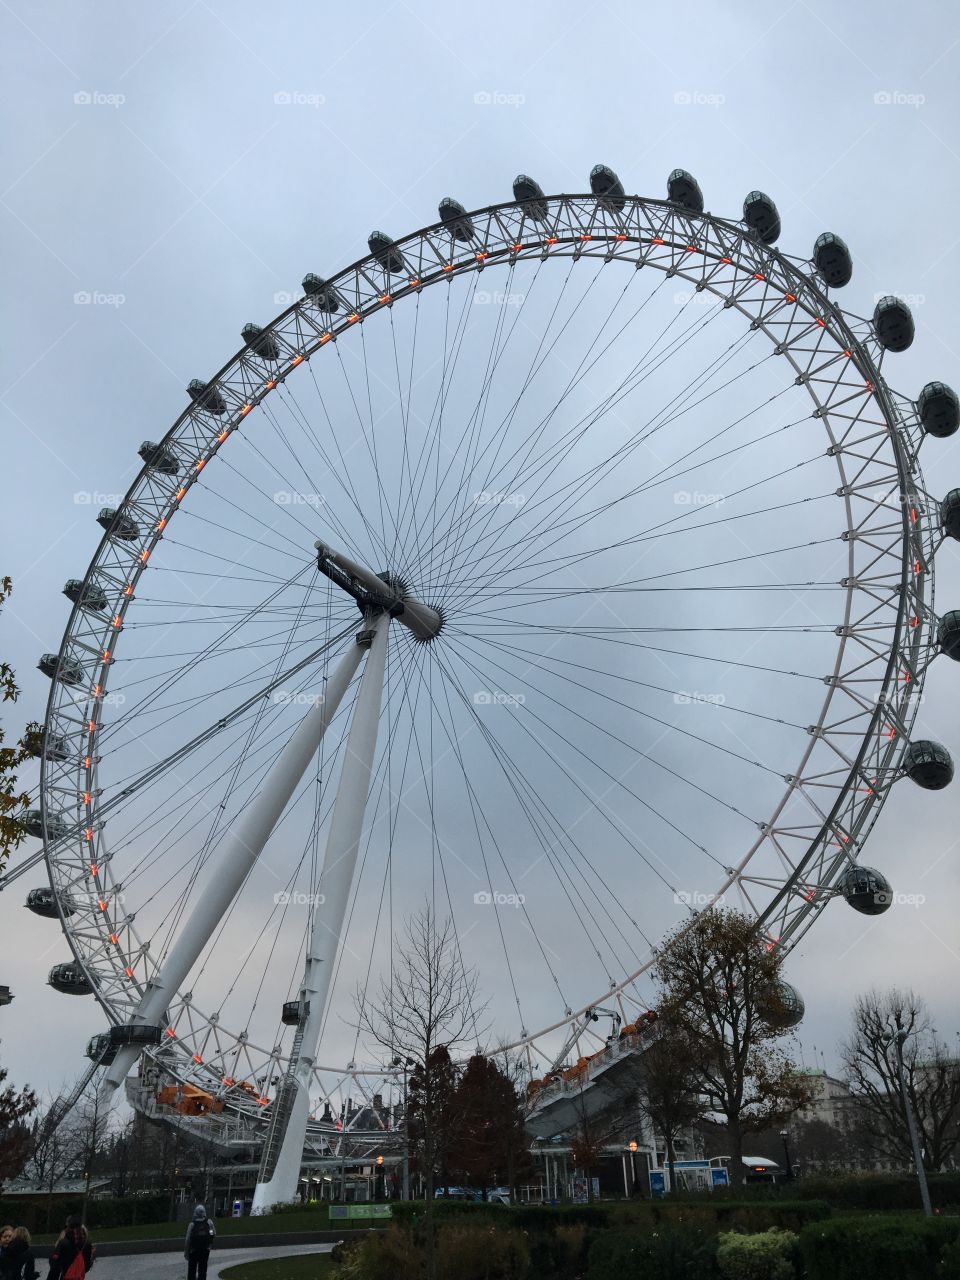 The London eye 